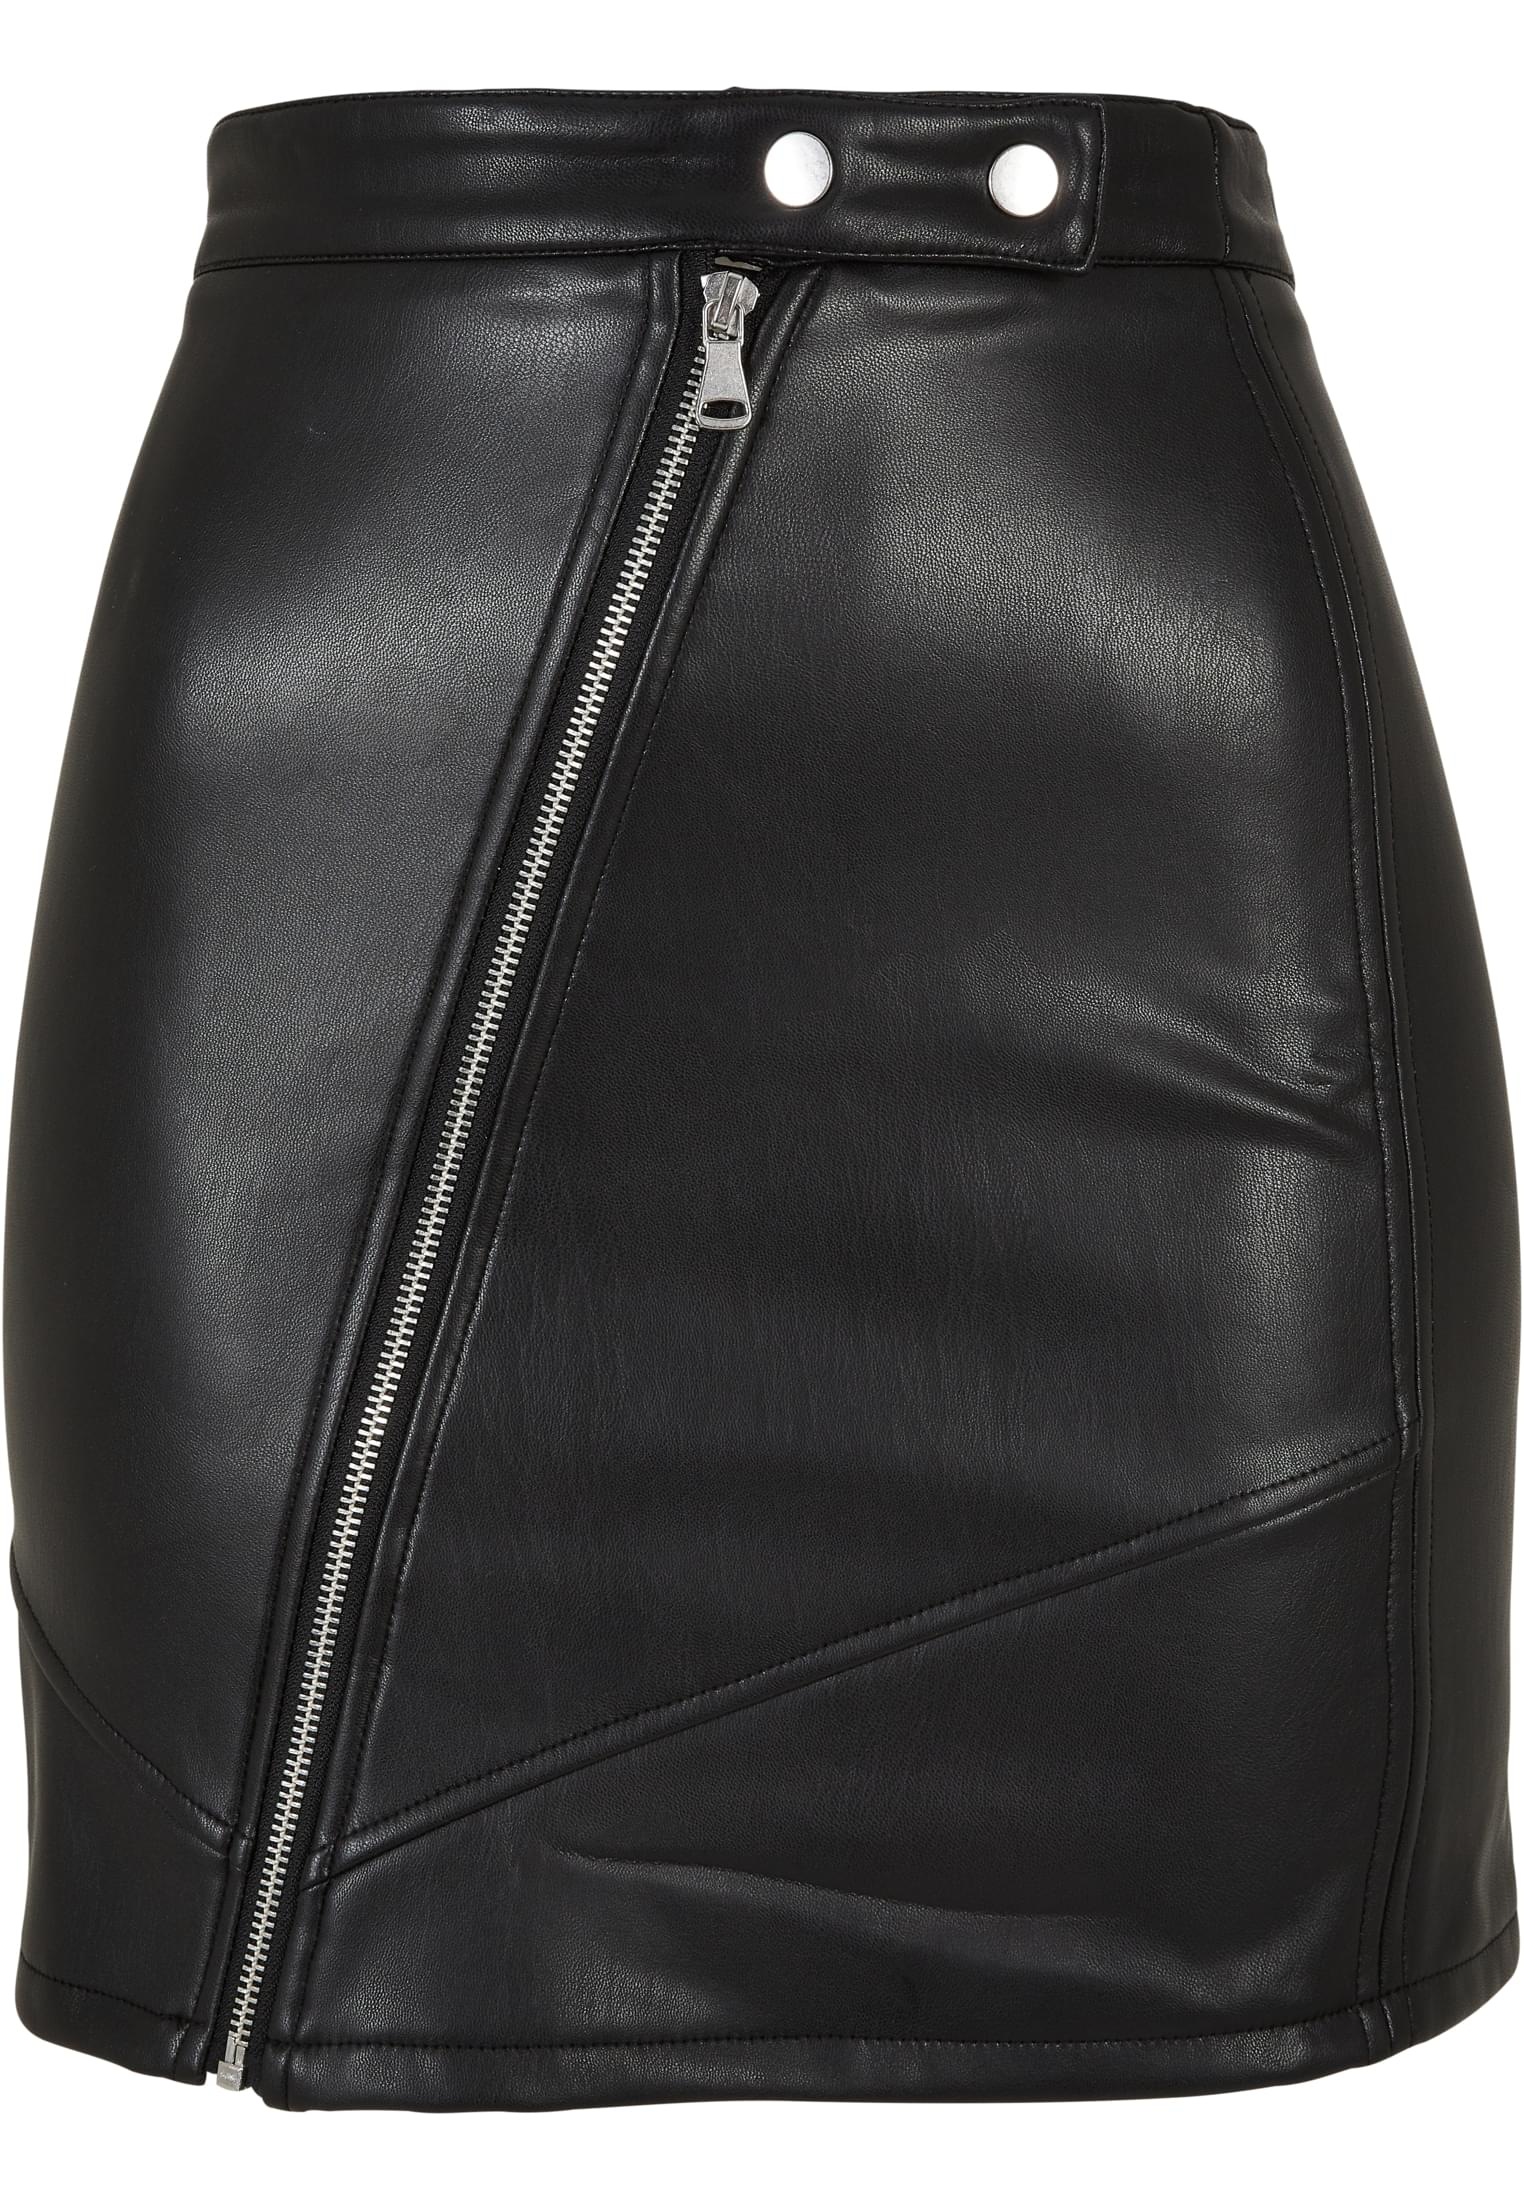 URBAN CLASSICS Jerseyrock »Damen Ladies kaufen online Synthetic Biker Leather tlg.) | Skirt«, BAUR (1